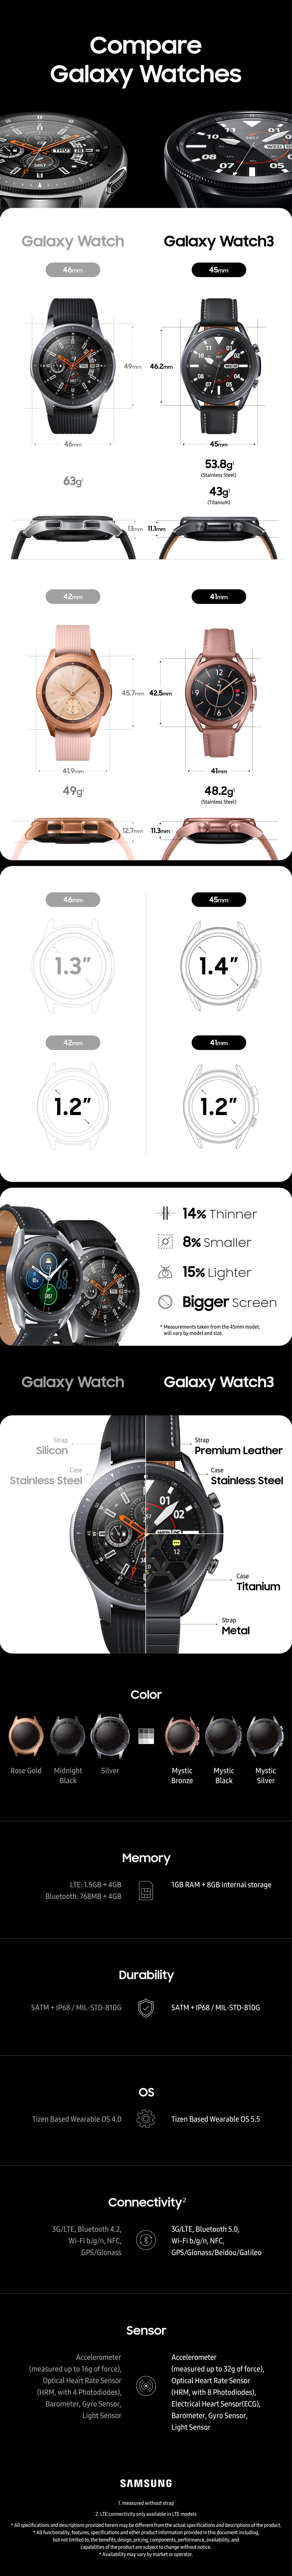 Samsung Galaxy Watch 3 news